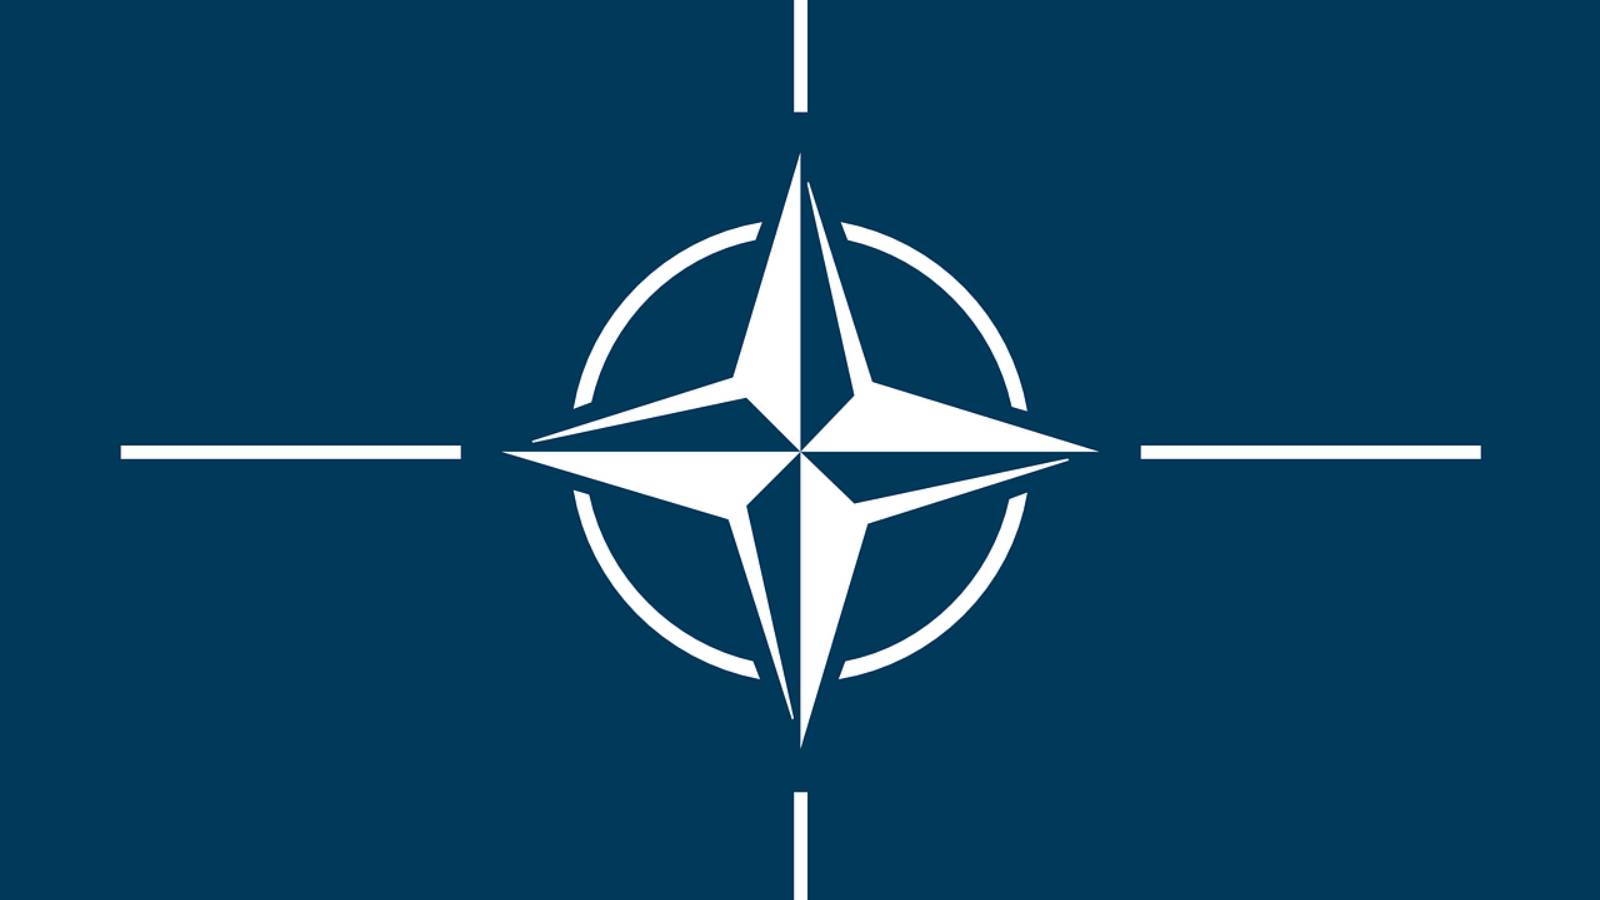 NATO Decide Actiunile Rusiei Ucraina Amenintare Directa